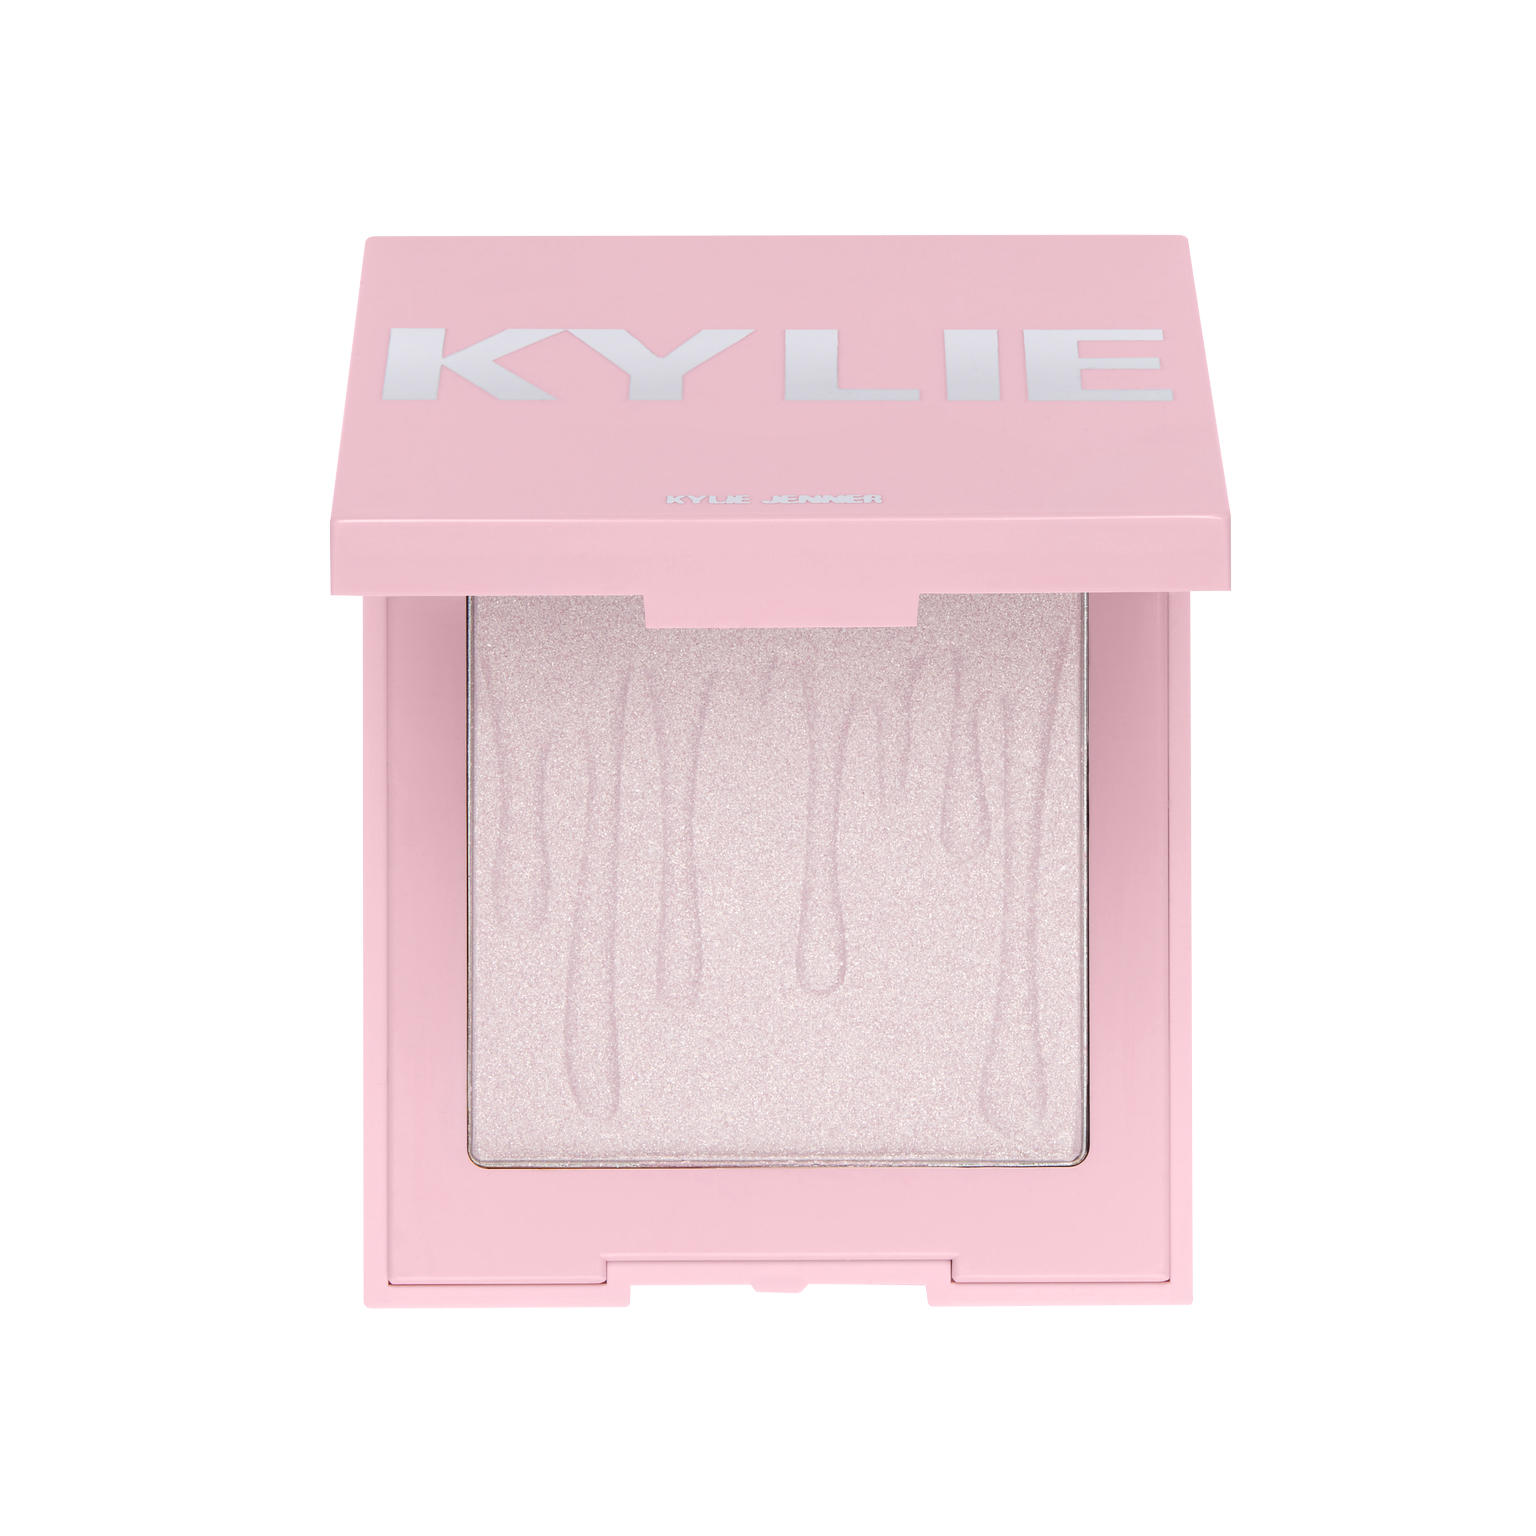 Kylie Cosmetics Kylighter Princess Please